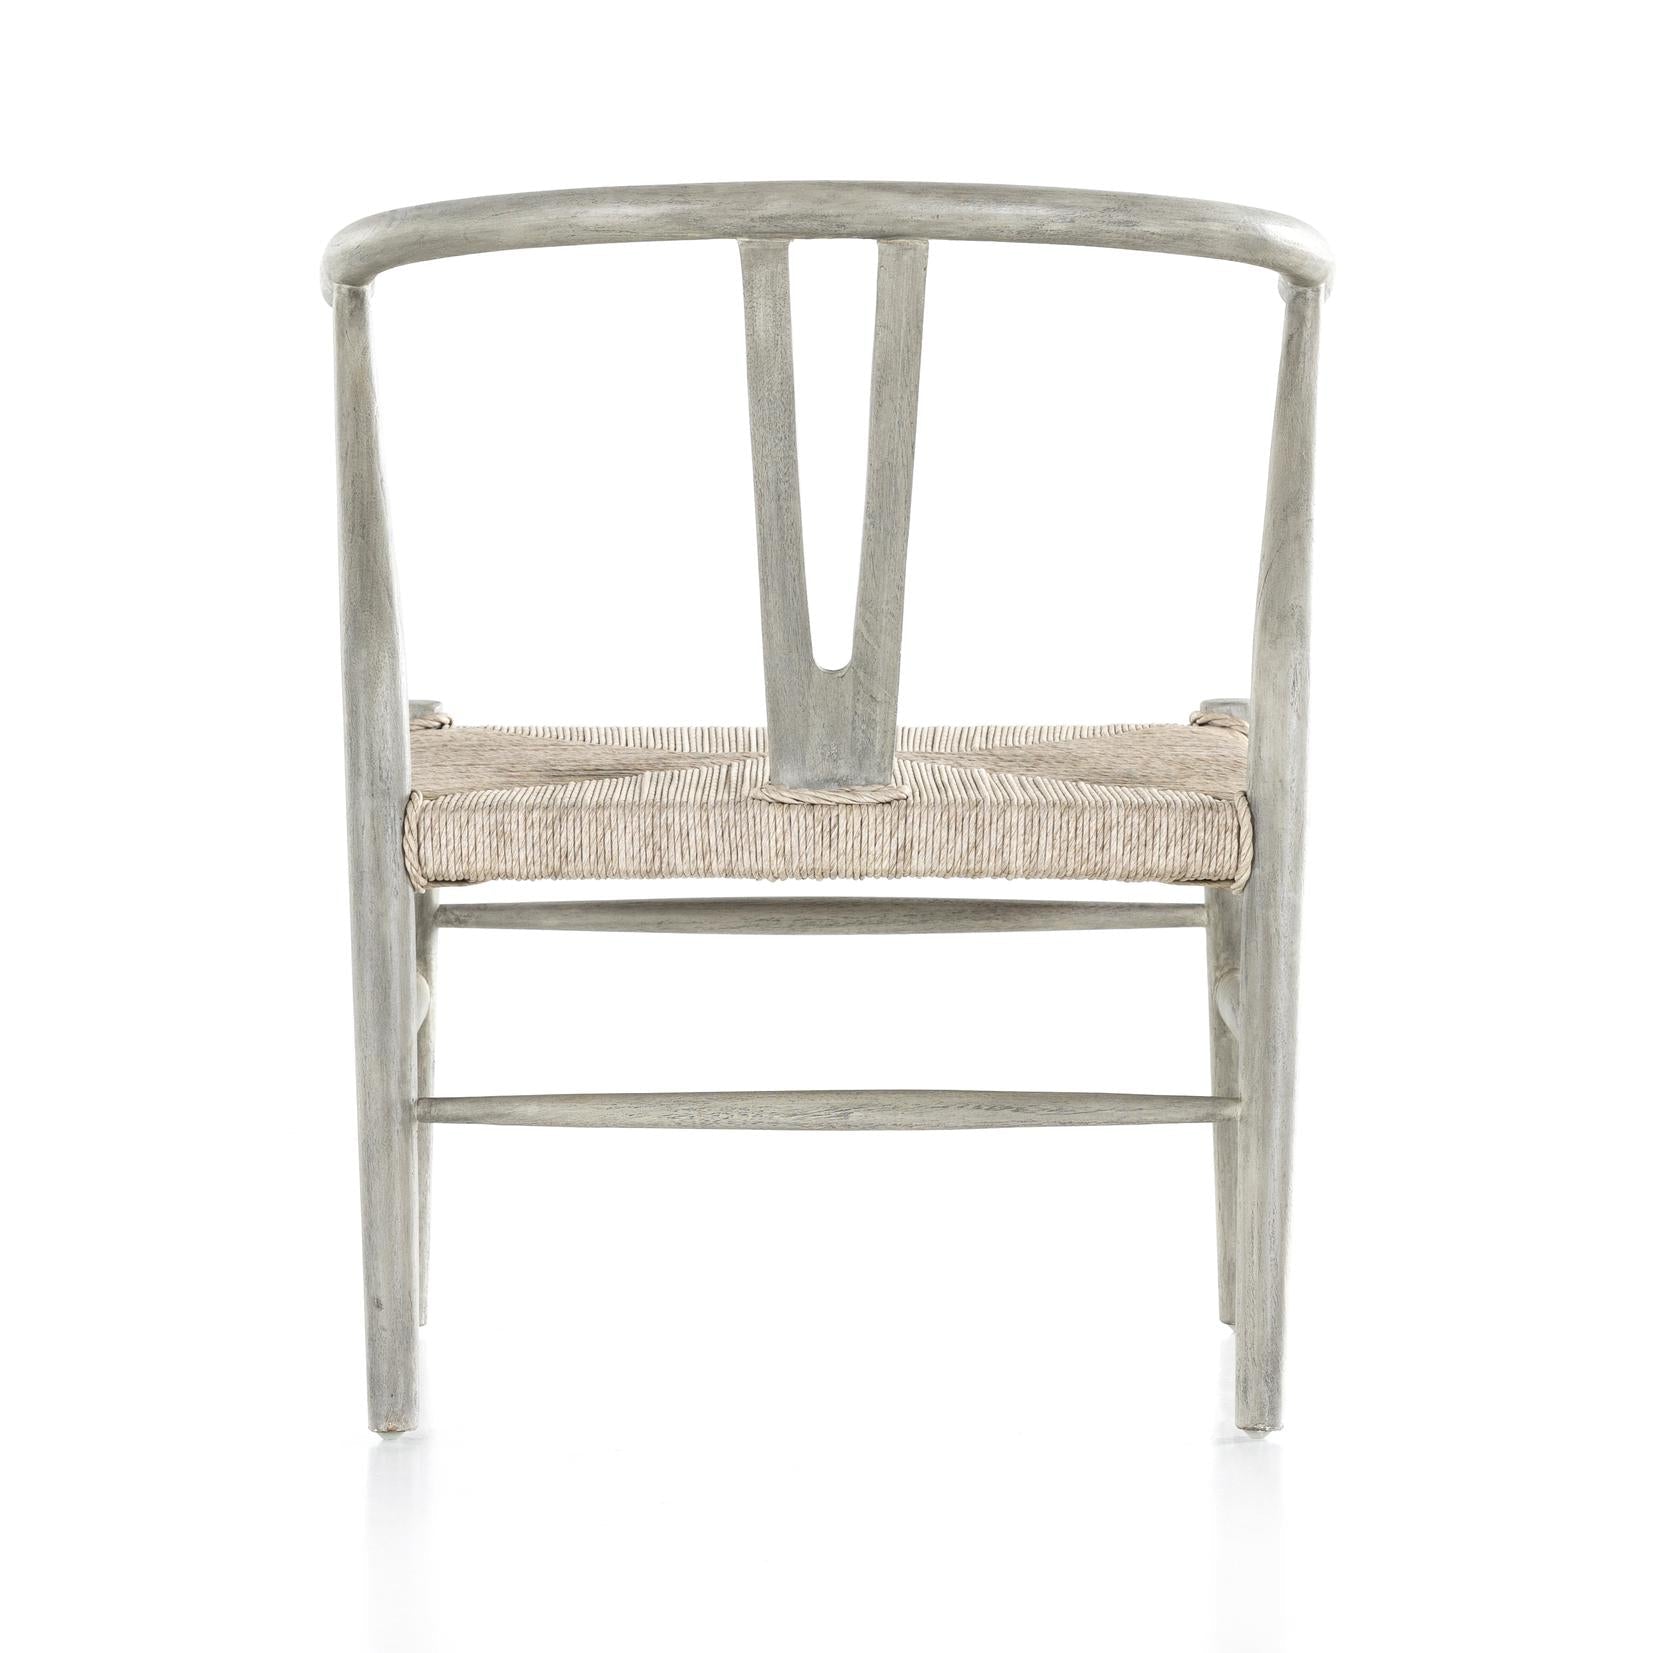 Muestra Chair - StyleMeGHD - Wooden Chair